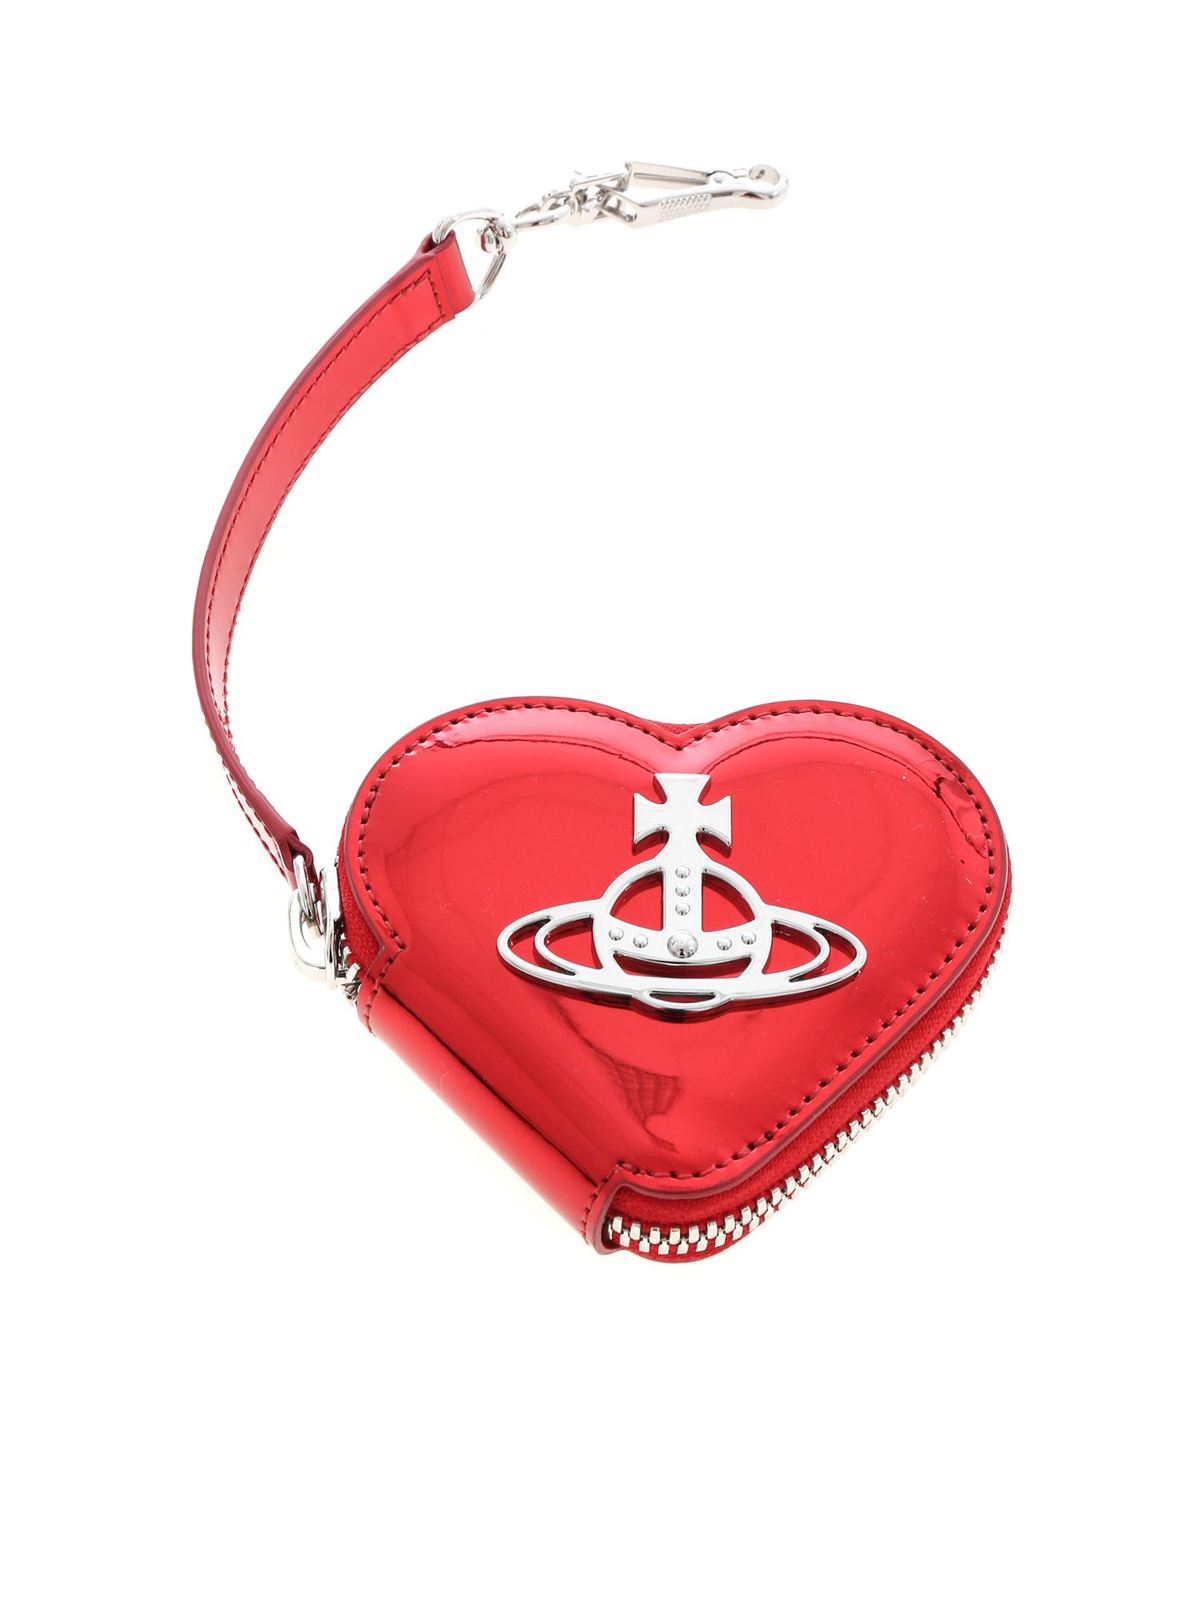 Vivienne Westwood Johanna Heart Handbag in Red